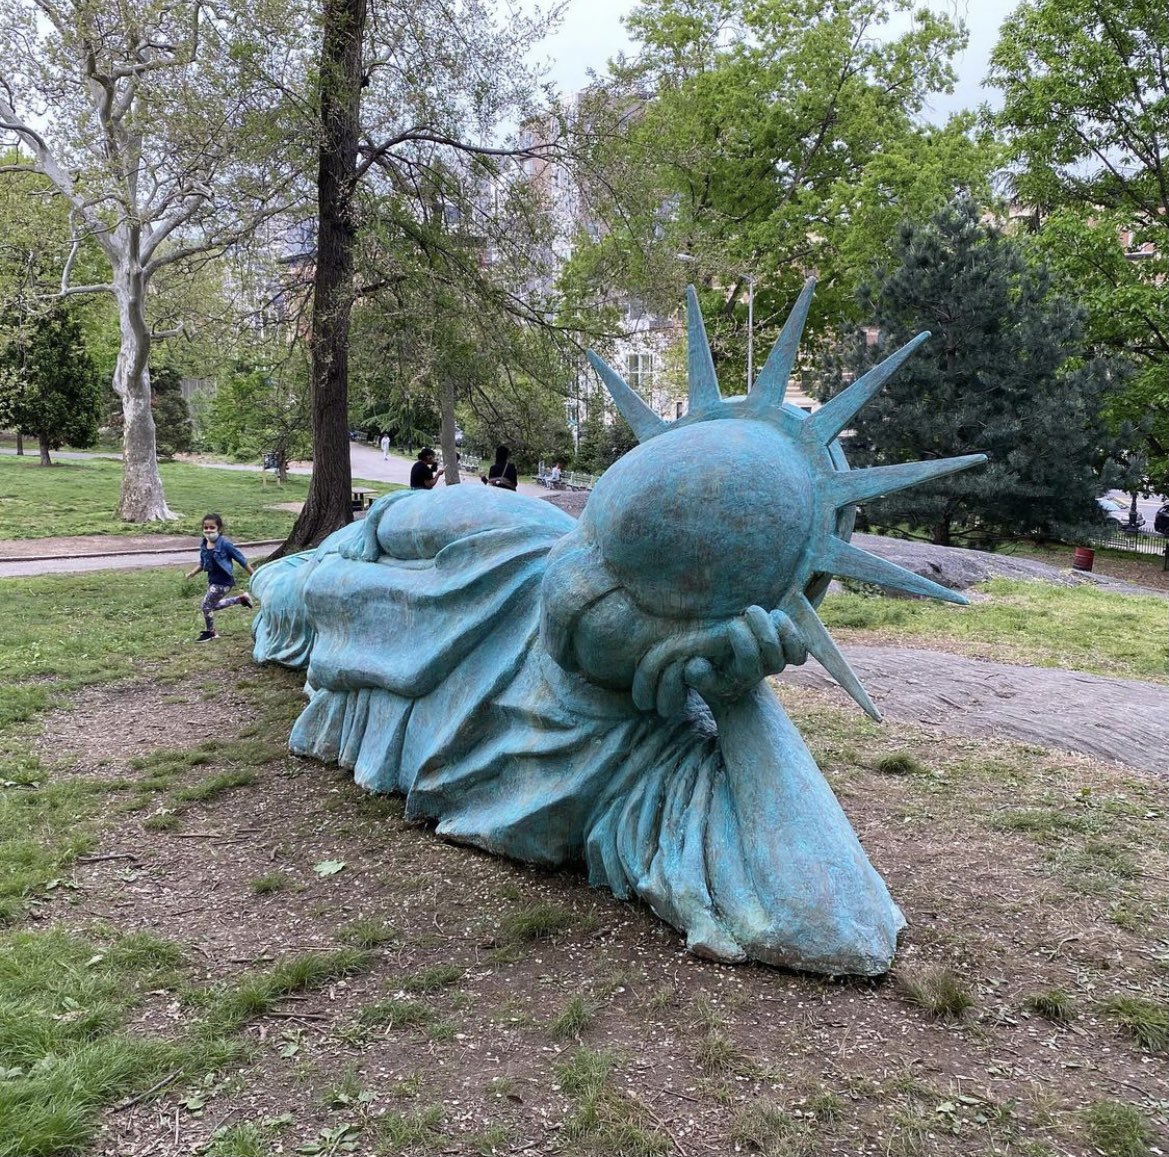 This Amazing Sculpture Of Reclining Liberty 2021 By Zaq Landsberg in Harlem #MorningsidePark #NYC #StreetArt